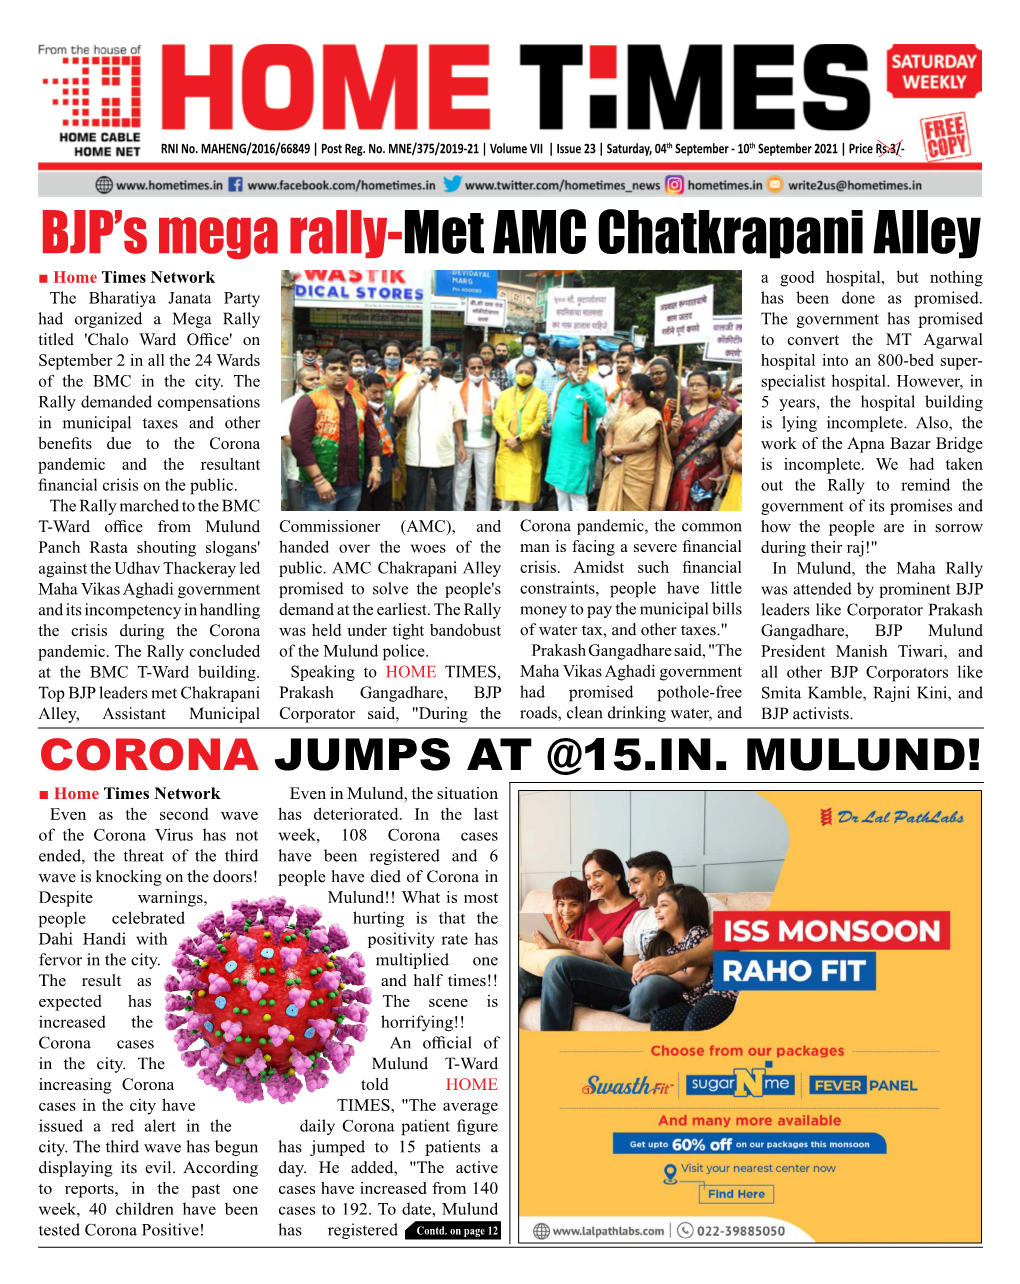 BJP's Mega Rally-Met AMC Chatkrapani Alley